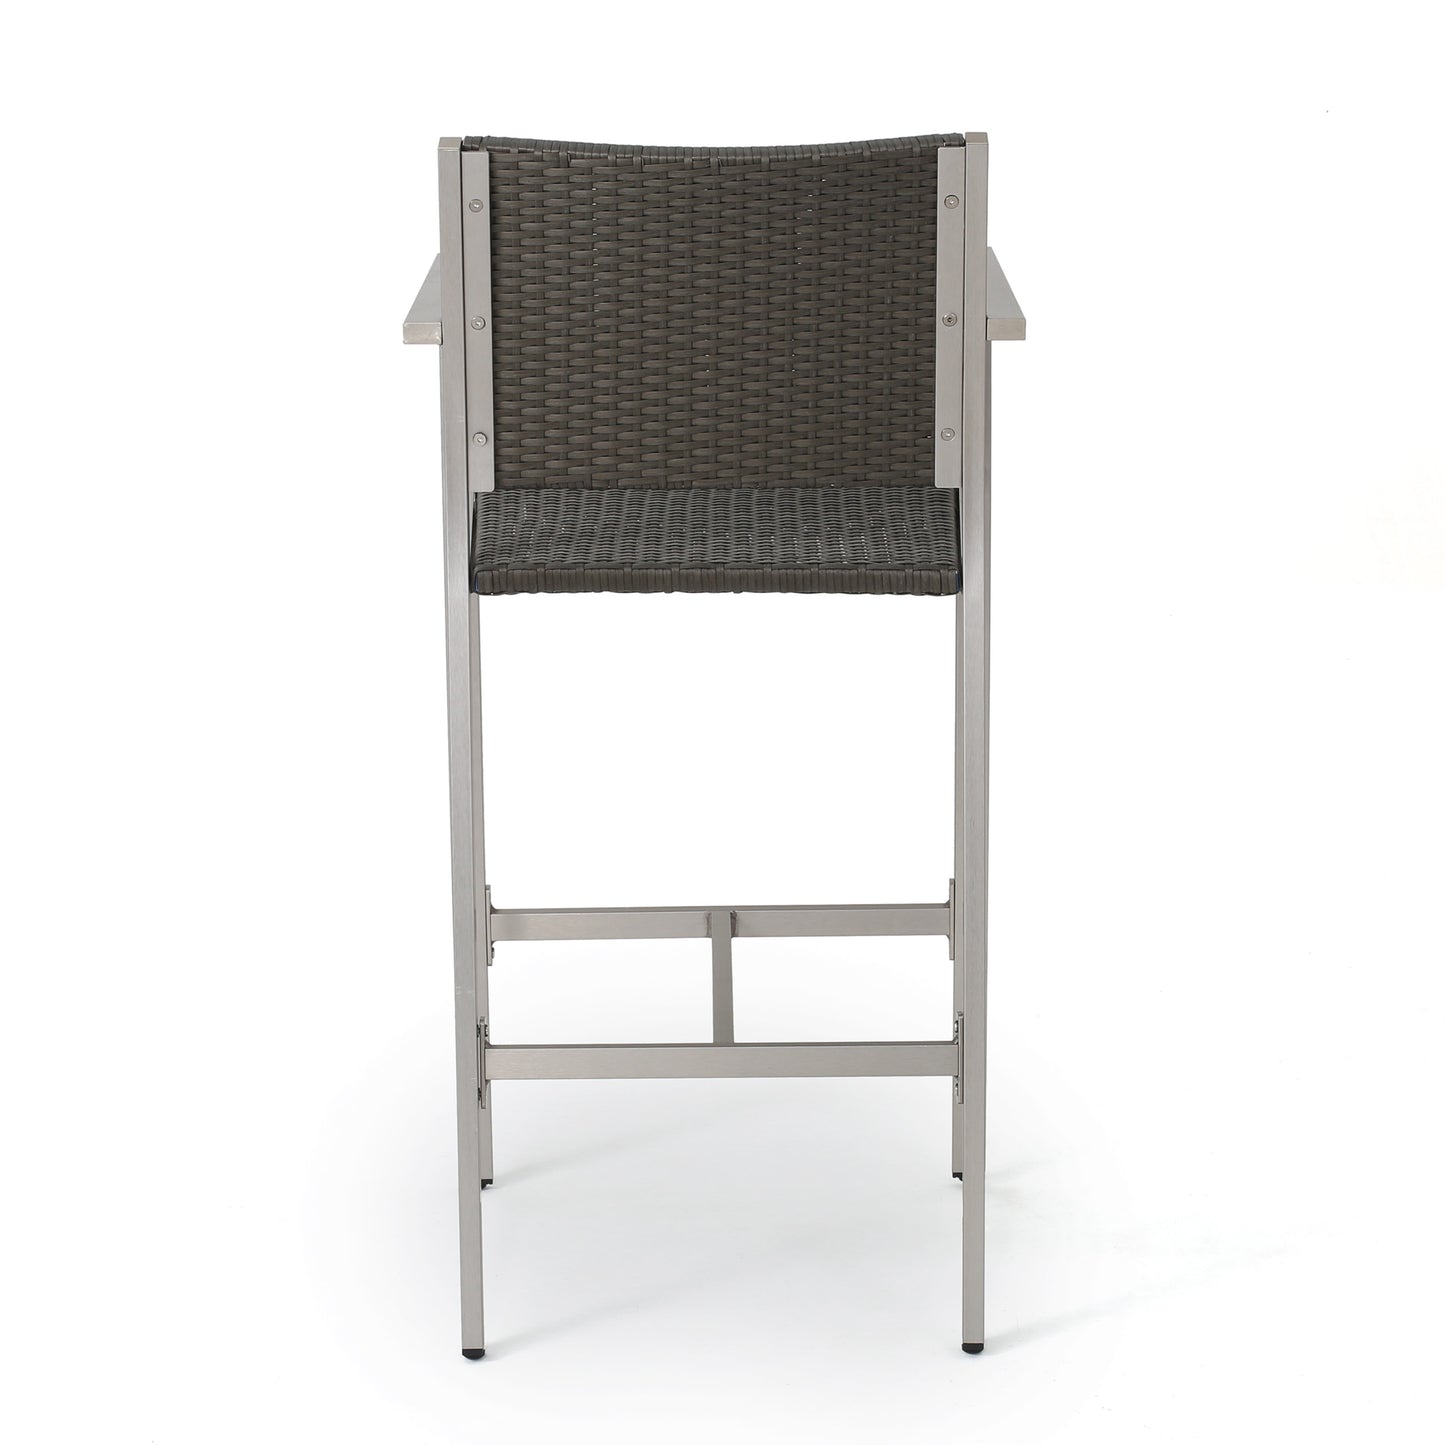 Capral 30-Inch Outdoor Grey Wicker Barstools (Set of 2)